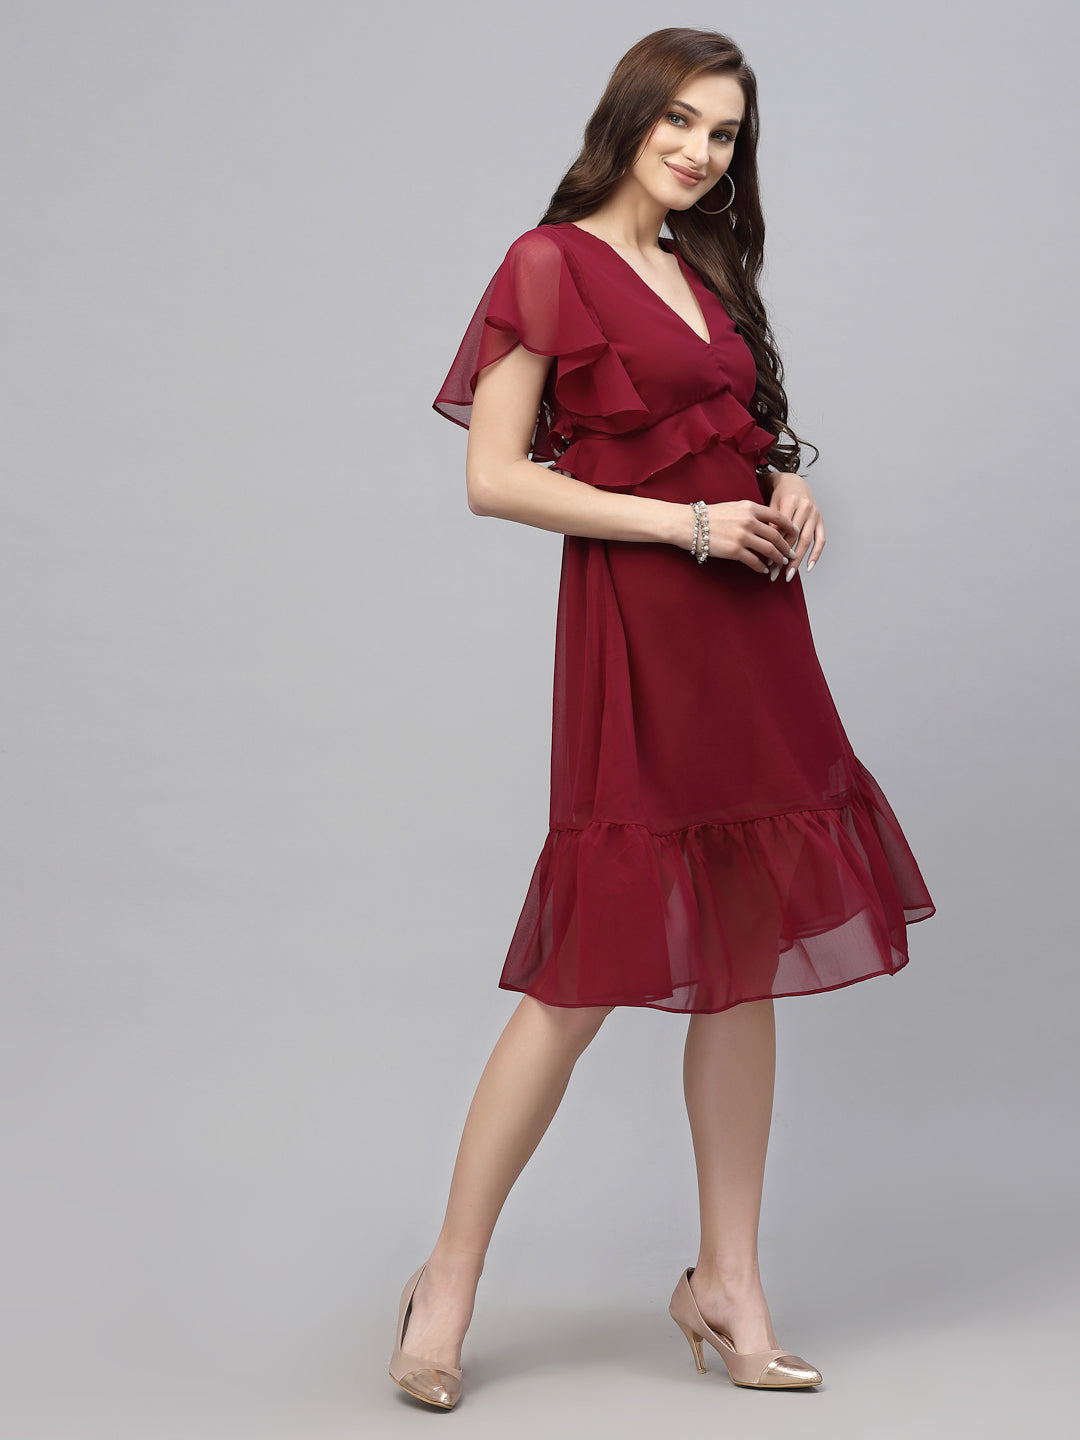 Valbone Women’s Red Georgette Solid Print Dress